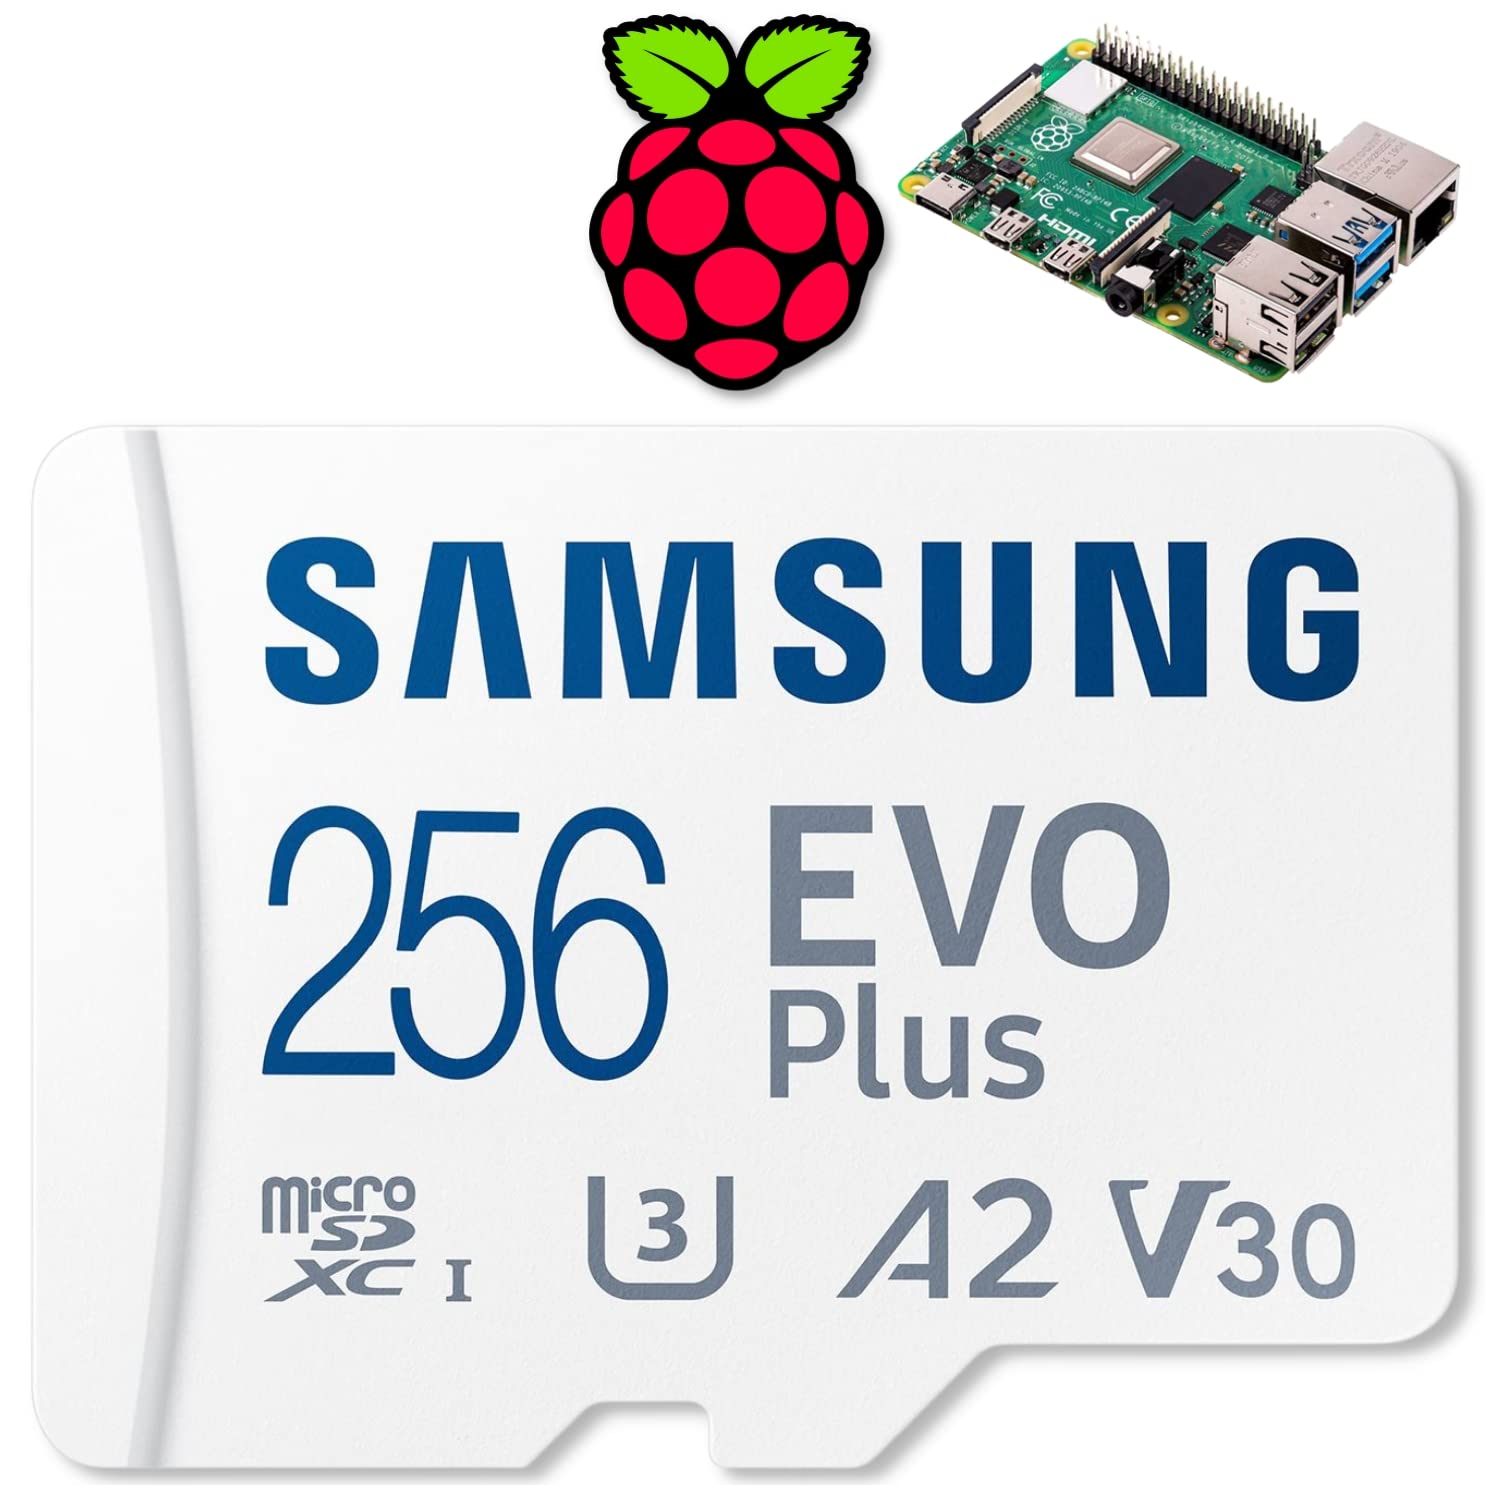 STEADYGAMER - 256GB Raspberry Pi Preloaded Raspberry Pi OS Raspbian Evo Plus Micro SD Card 400 4 3B 3A 3B 2 Zer